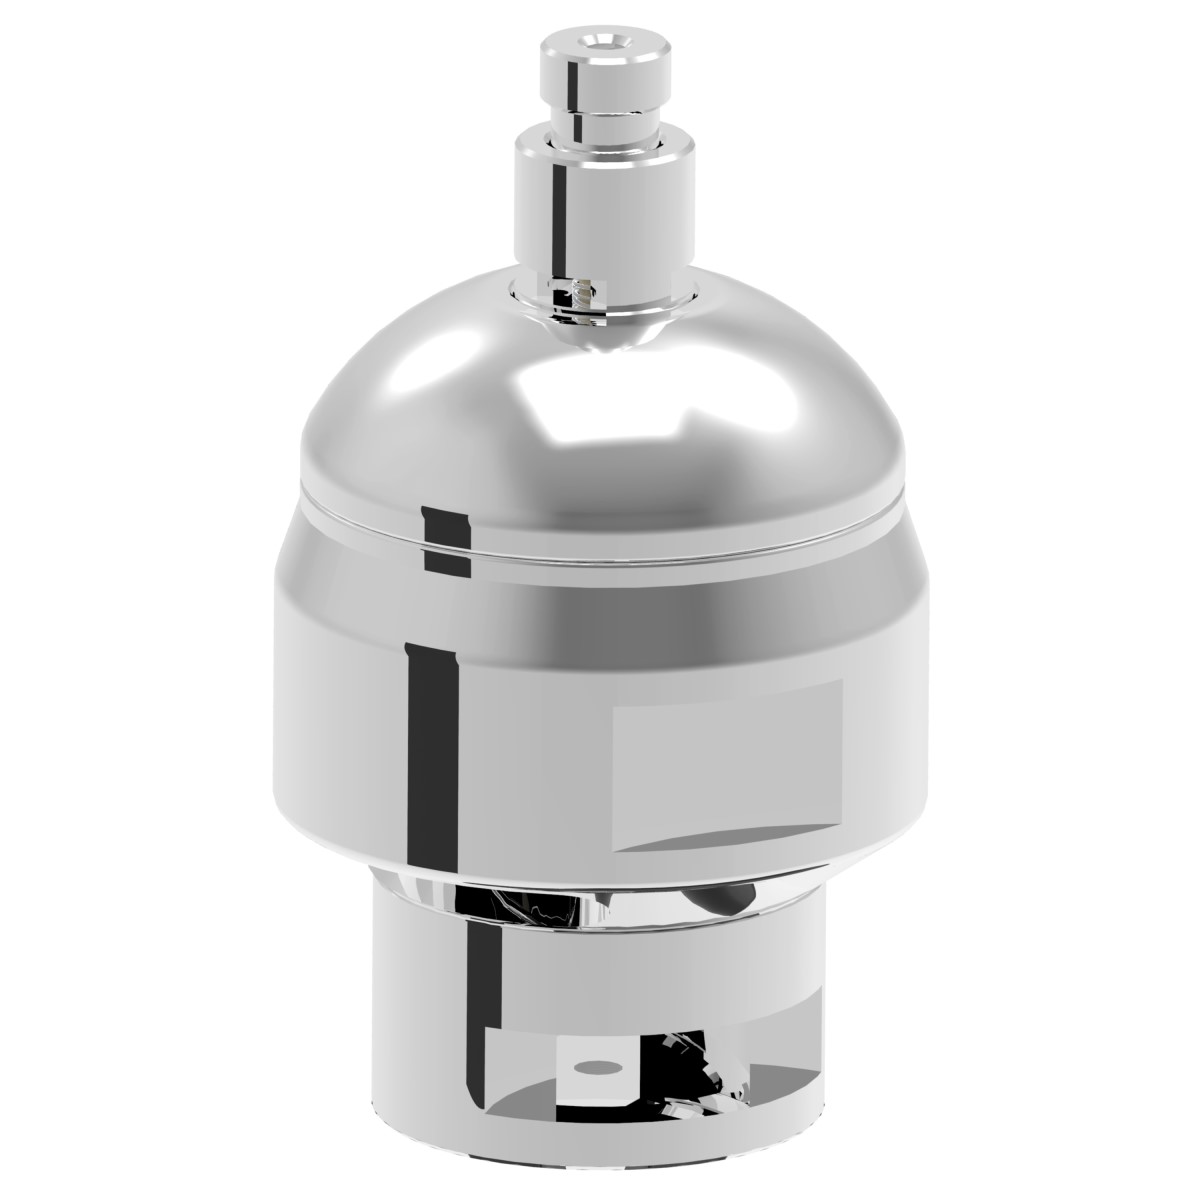 Safety valve for autoclave lids